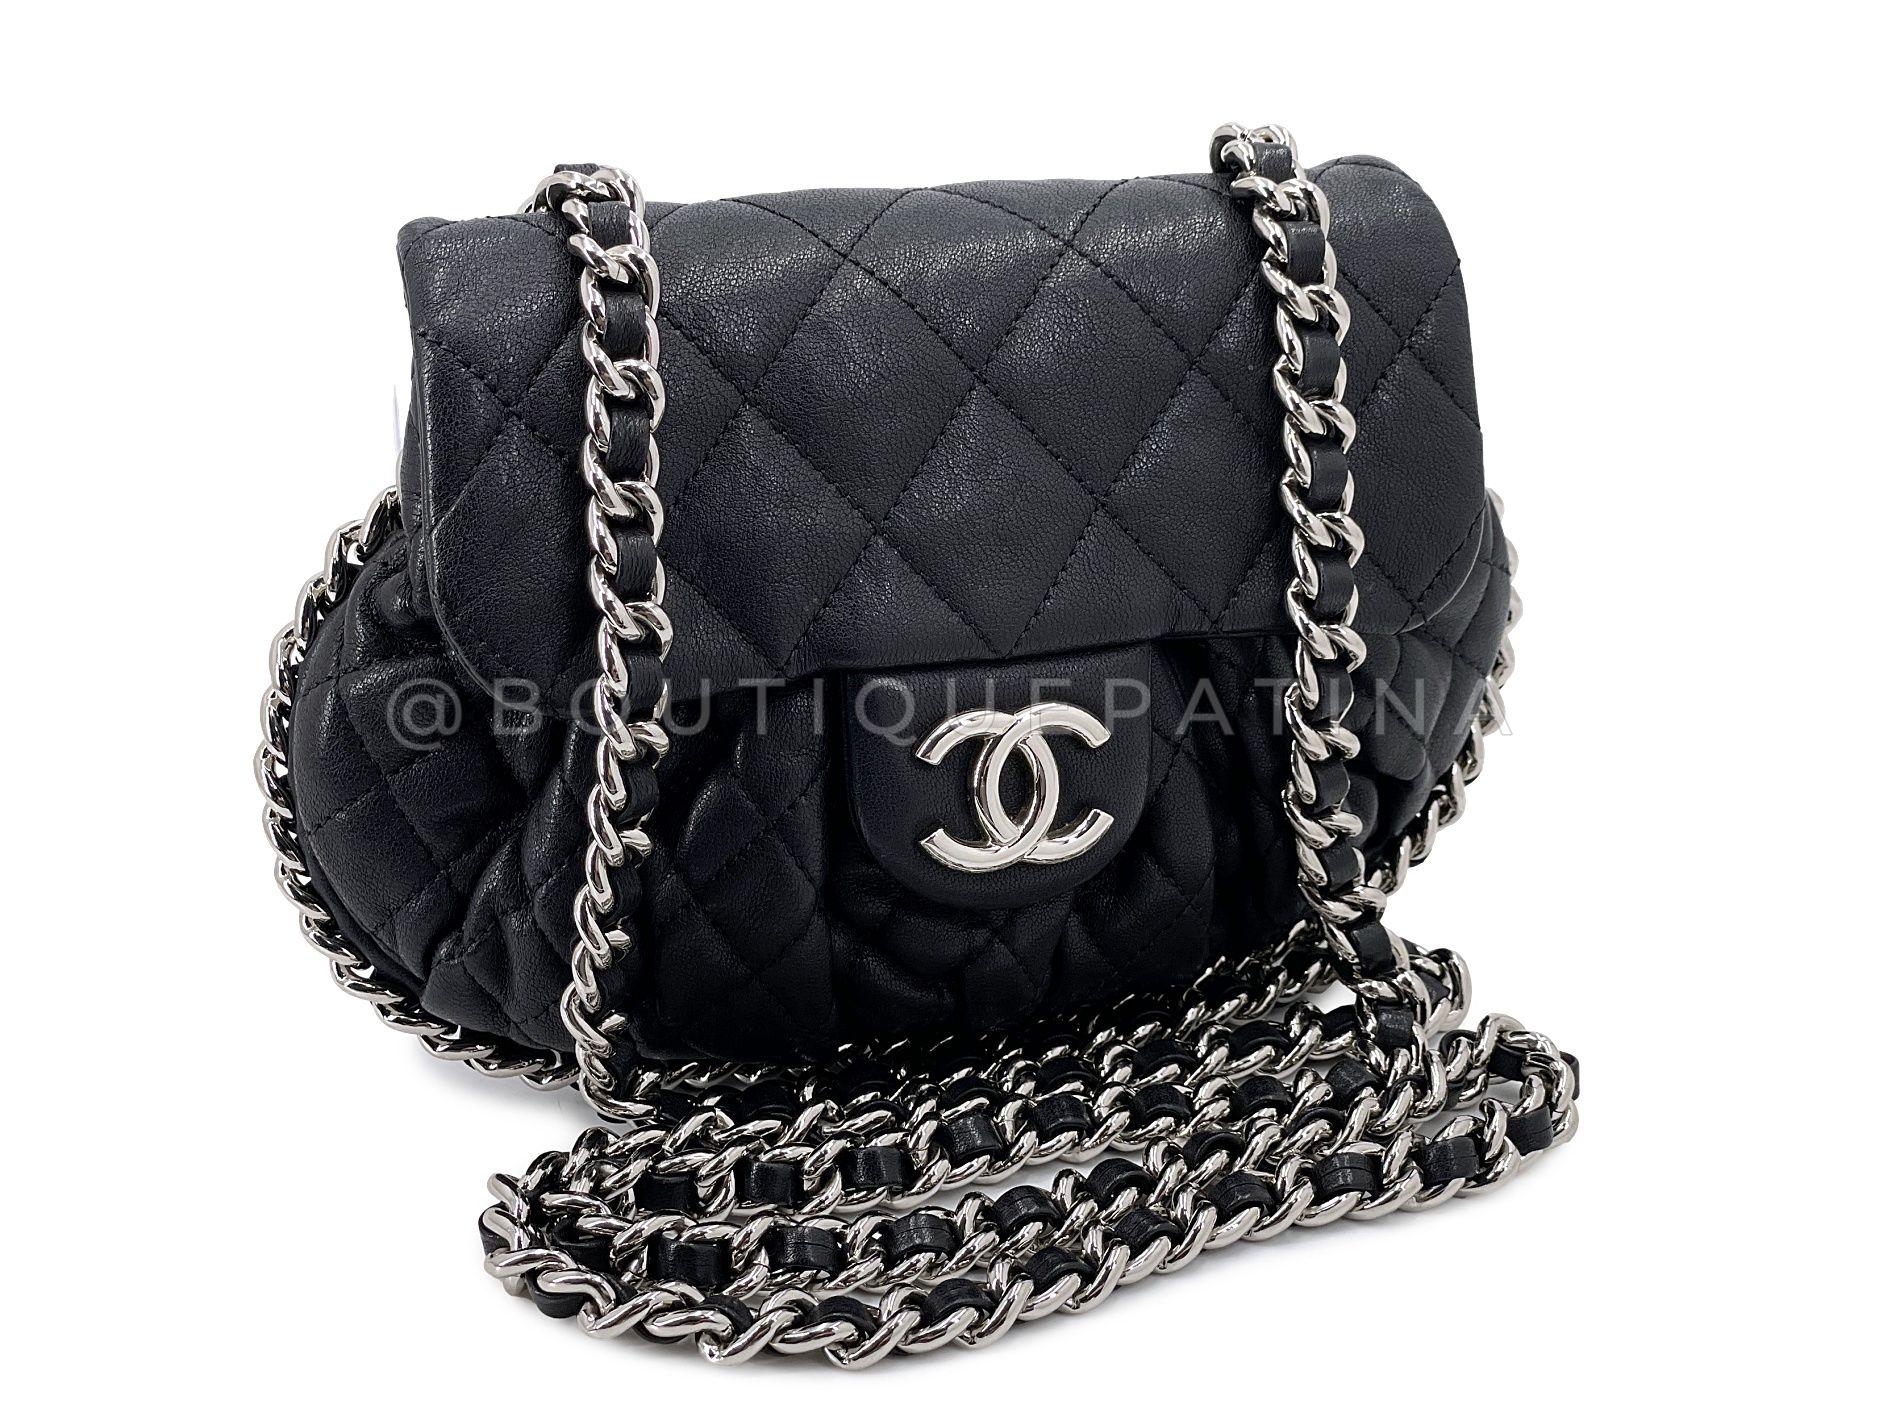 Store item: 68051
On many Chanel mavens' 